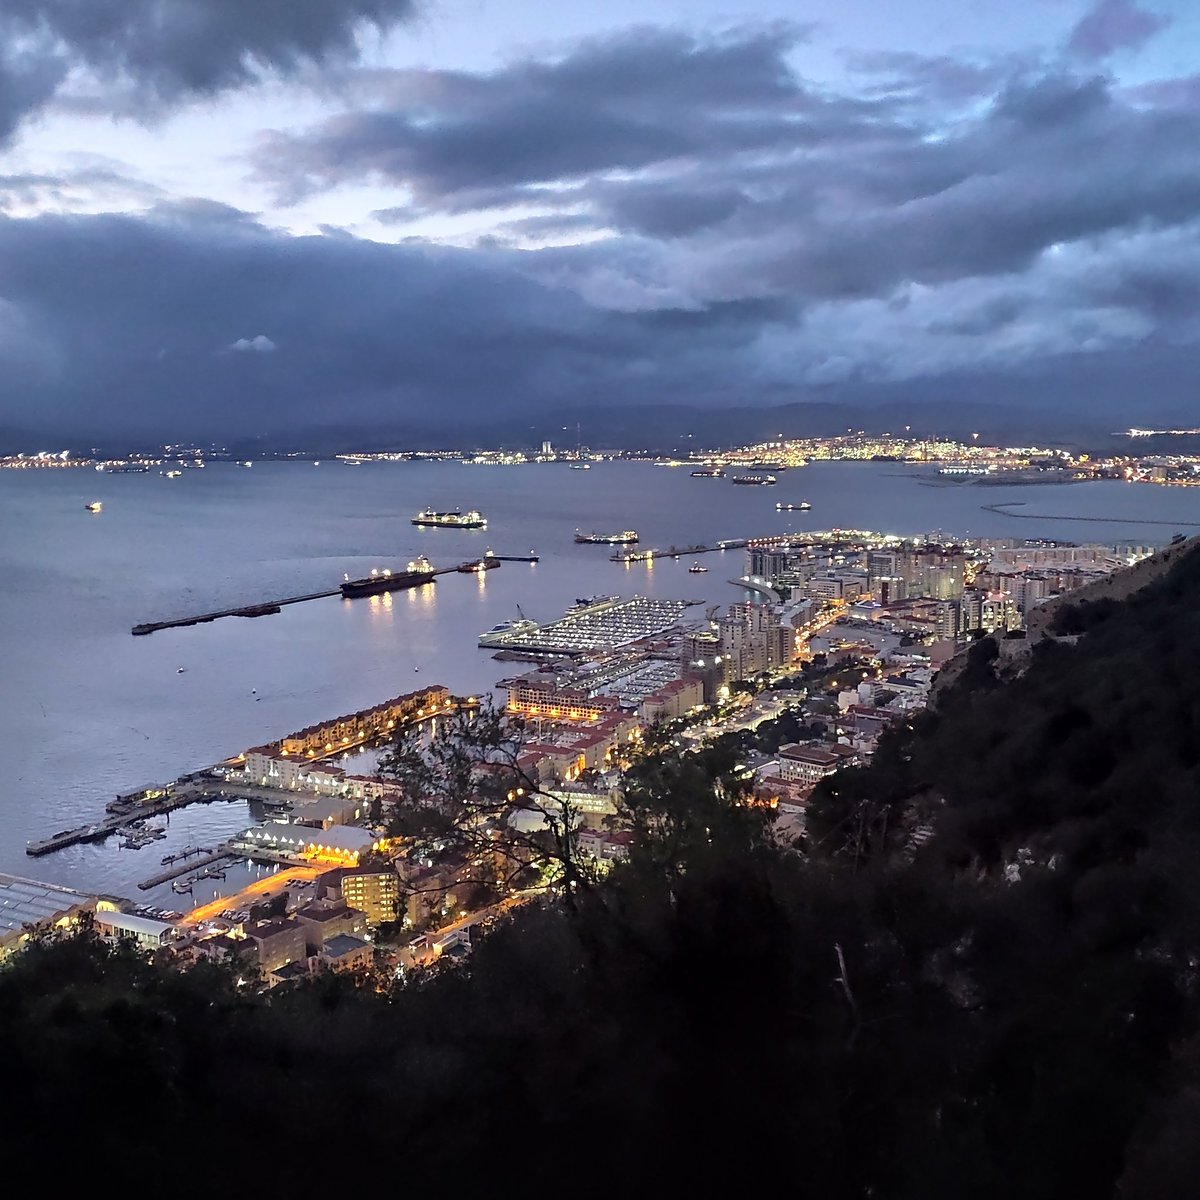 Our beautiful city of #Gibraltar at #dusk
 
#nightfall #upperrock #medsteps